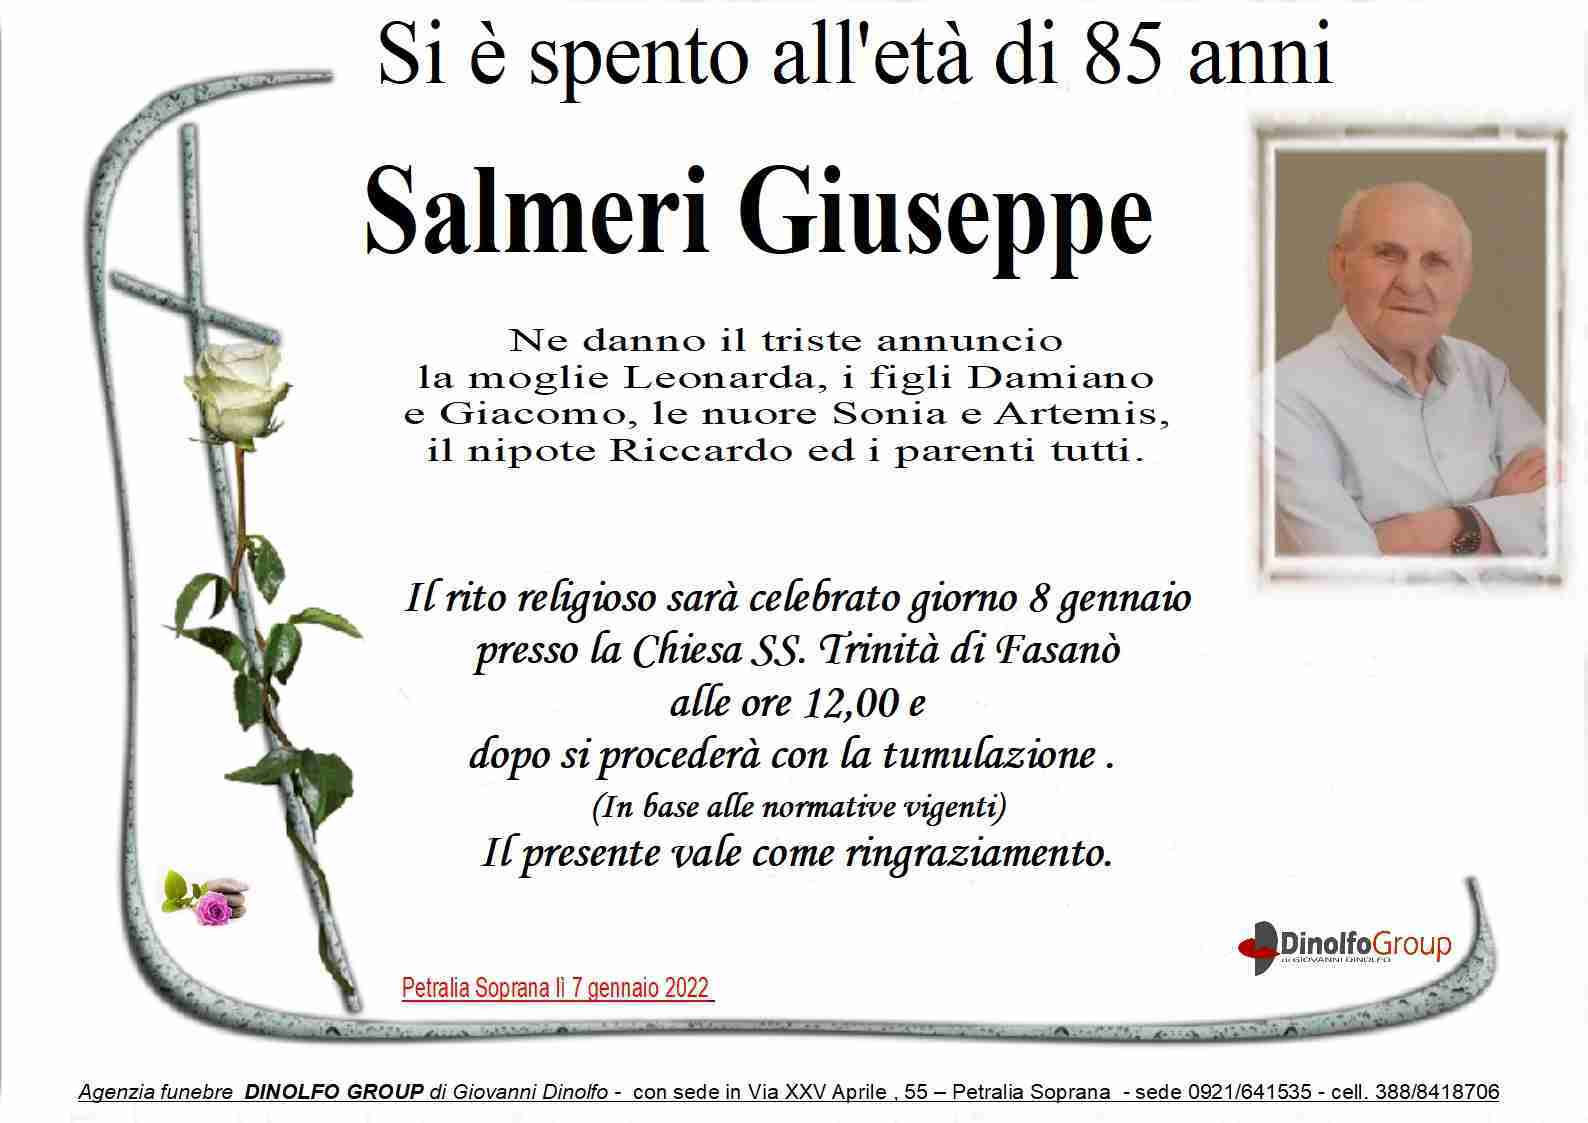 Giuseppe Salmeri